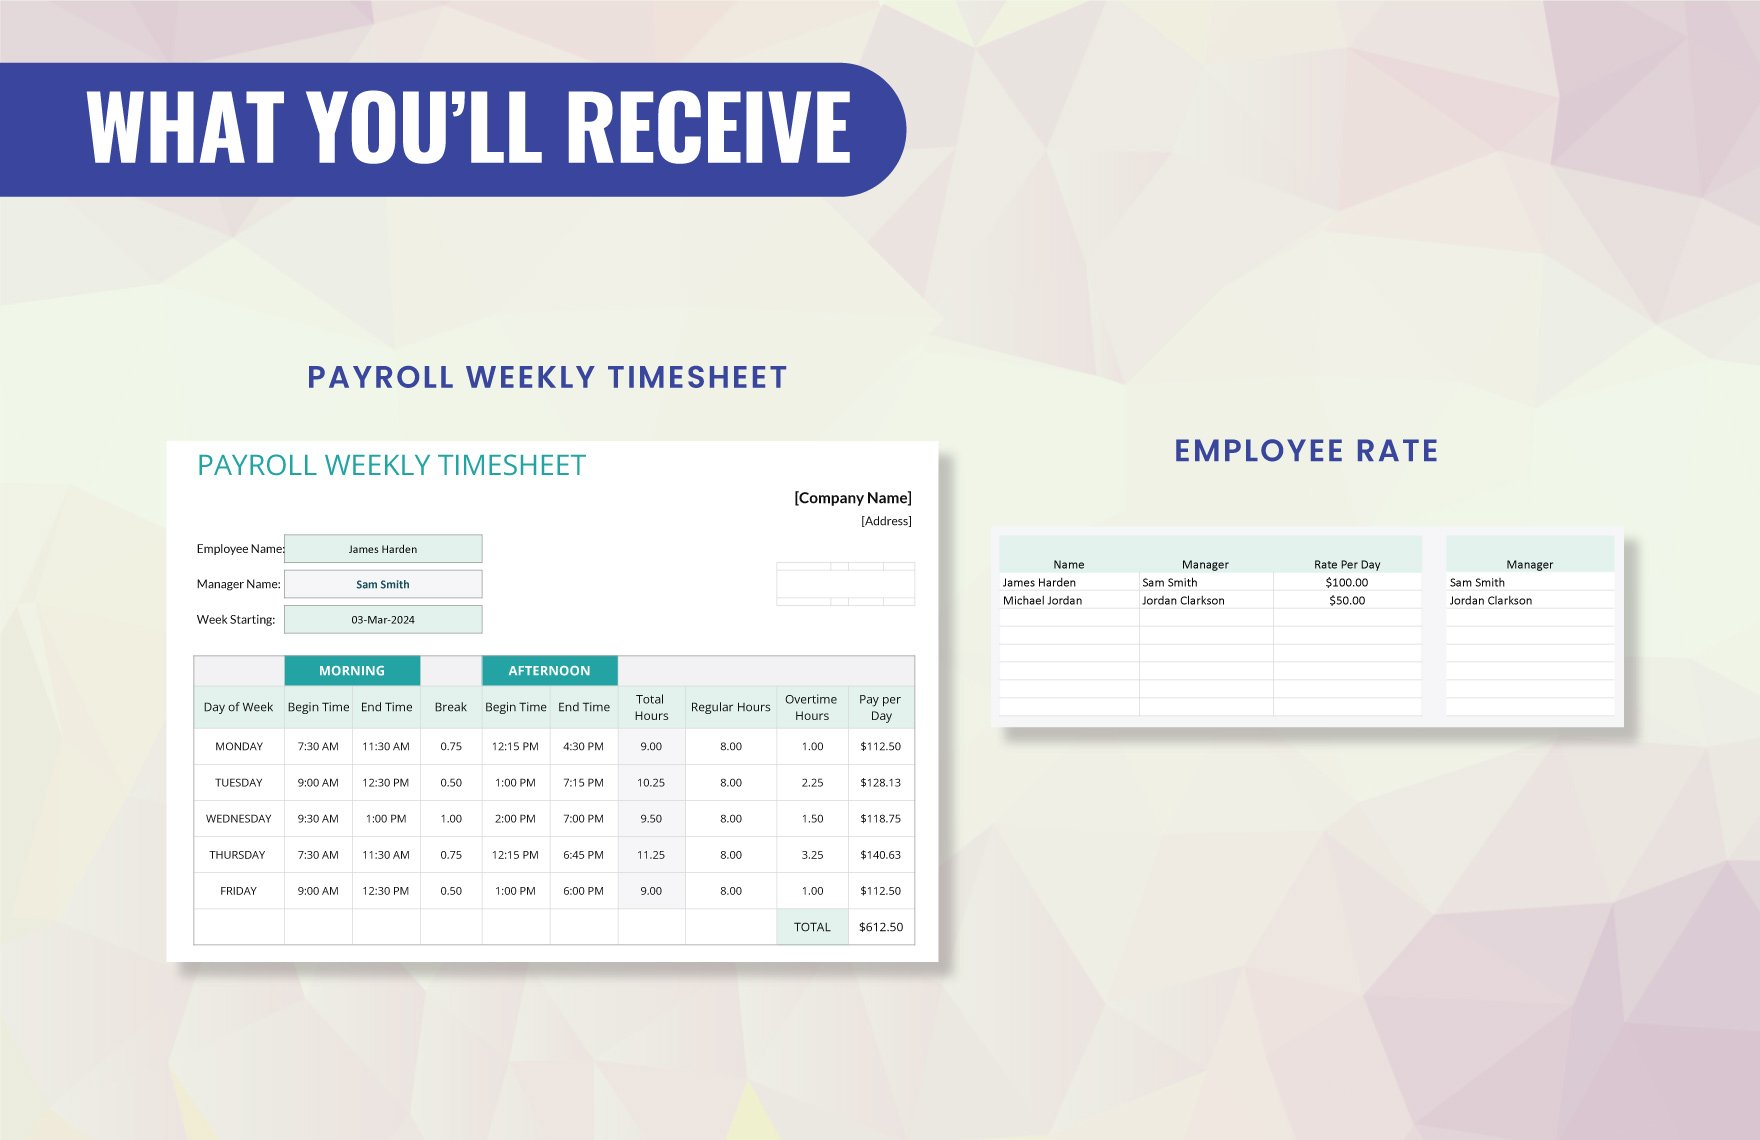 Payroll Weekly Timesheet Template